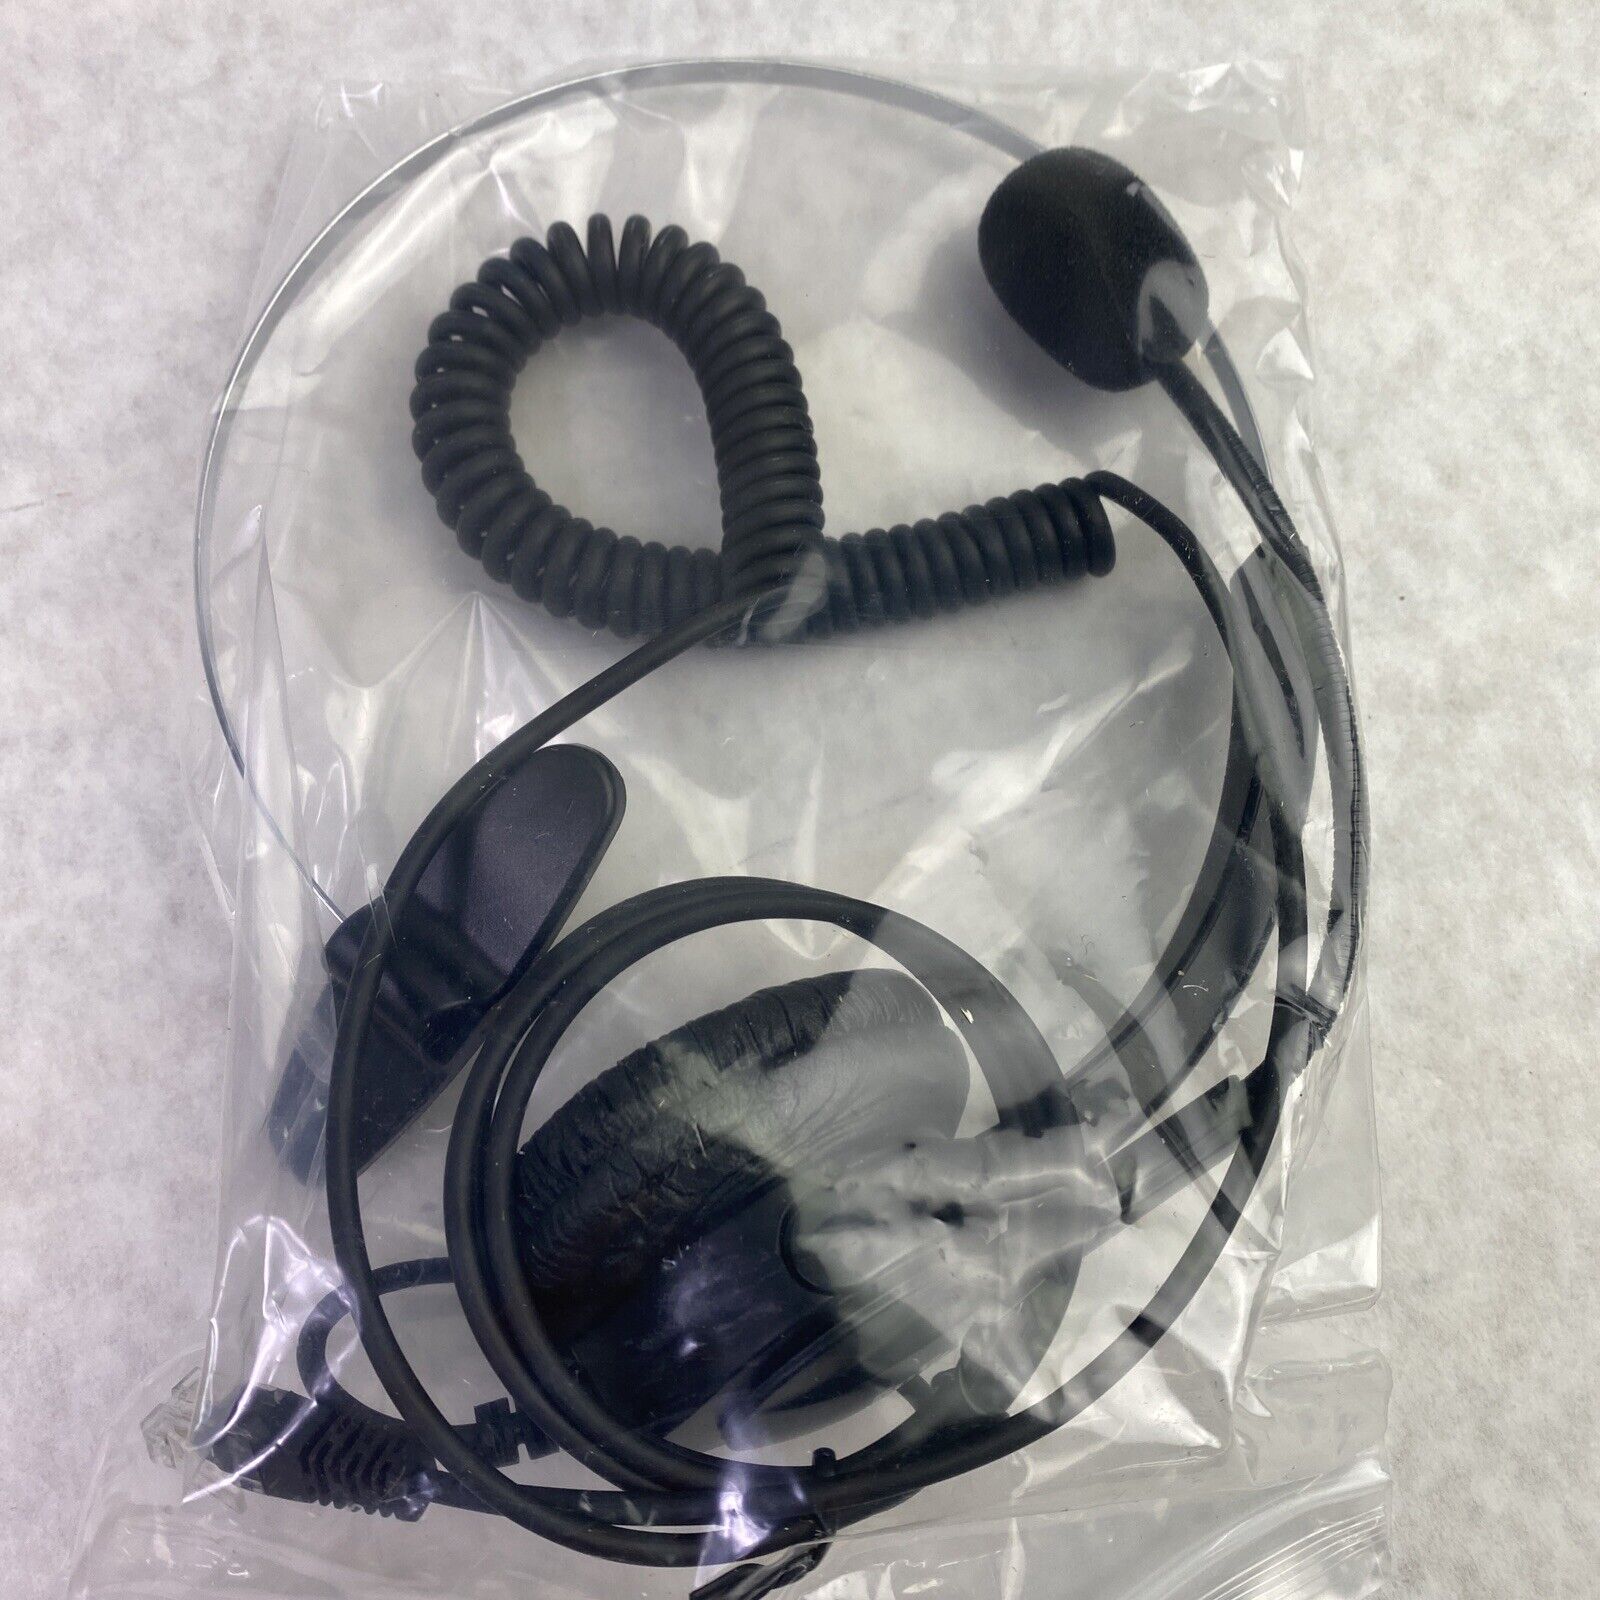 Voicejoy 100807 Call Center RJ-11 Phone Headset T420-C Black